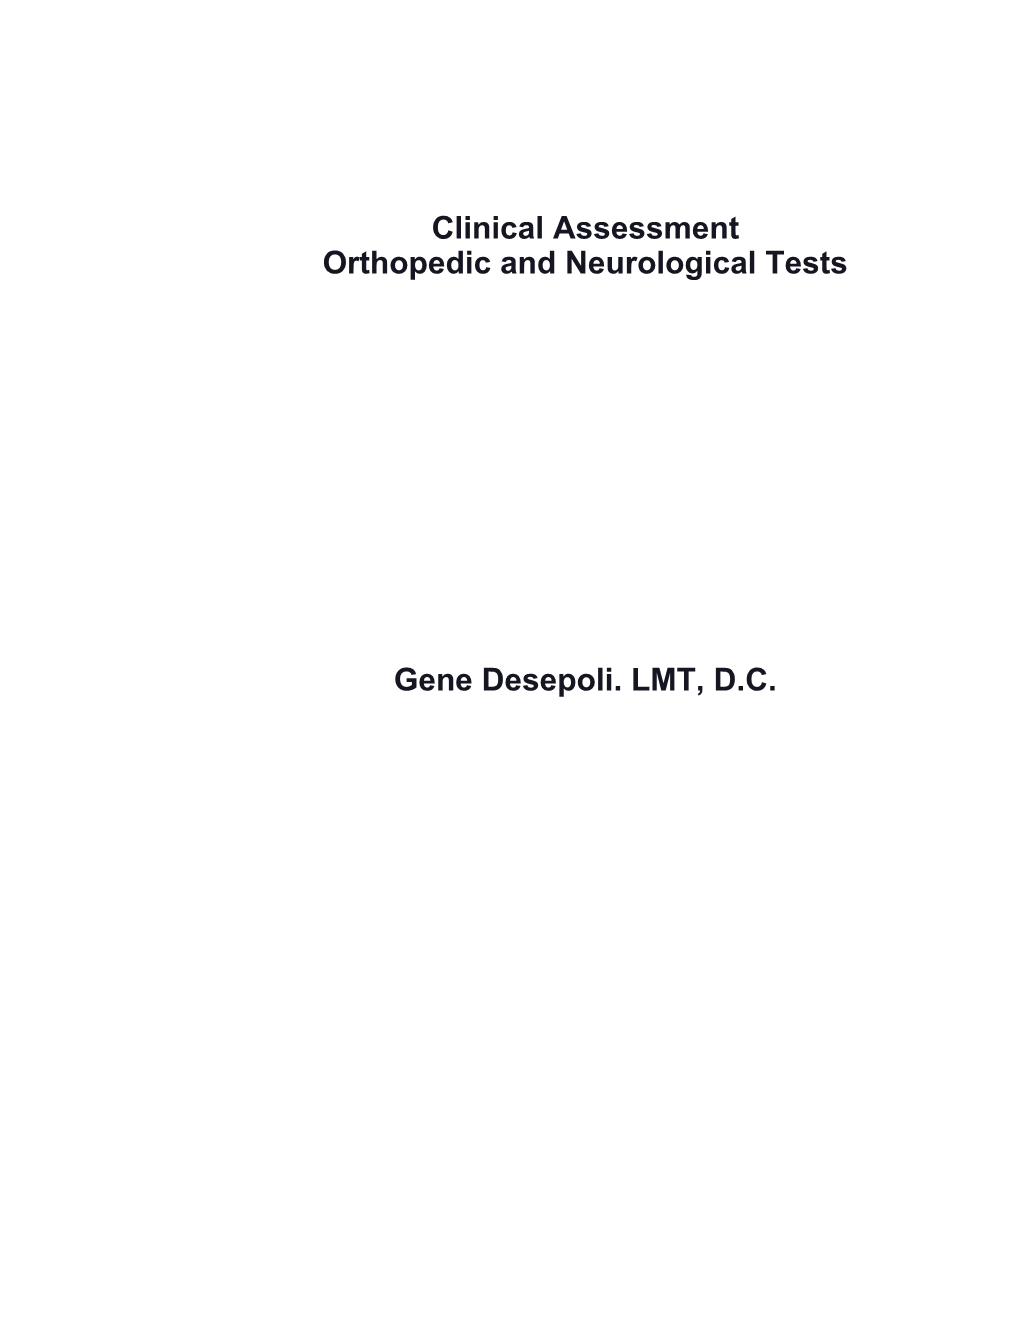 Orthopedic and Neurological Tests